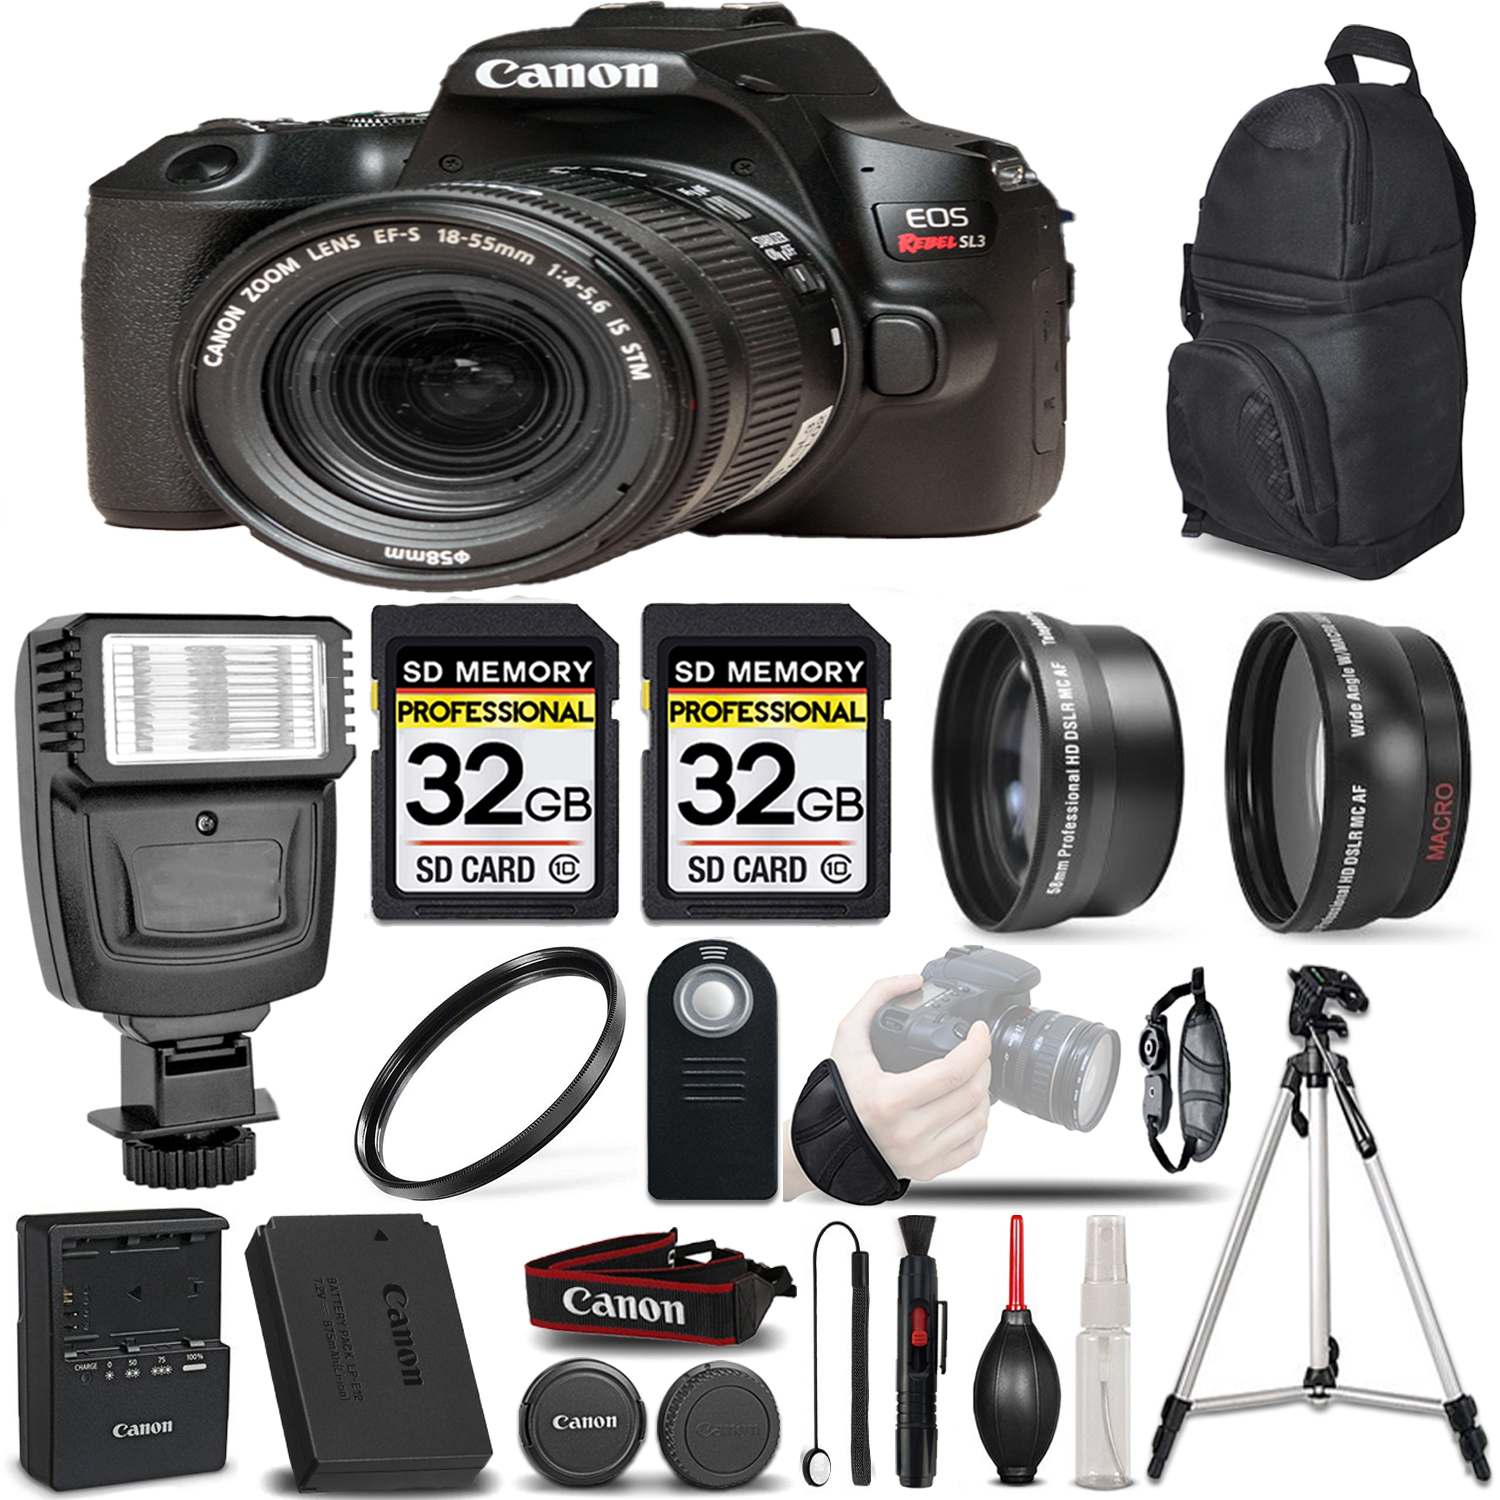 EOS Rebel SL3 DSLR Camera (Black) - 3 Lens Kit + 64GB + PRO FLASH *FREE SHIPPING*